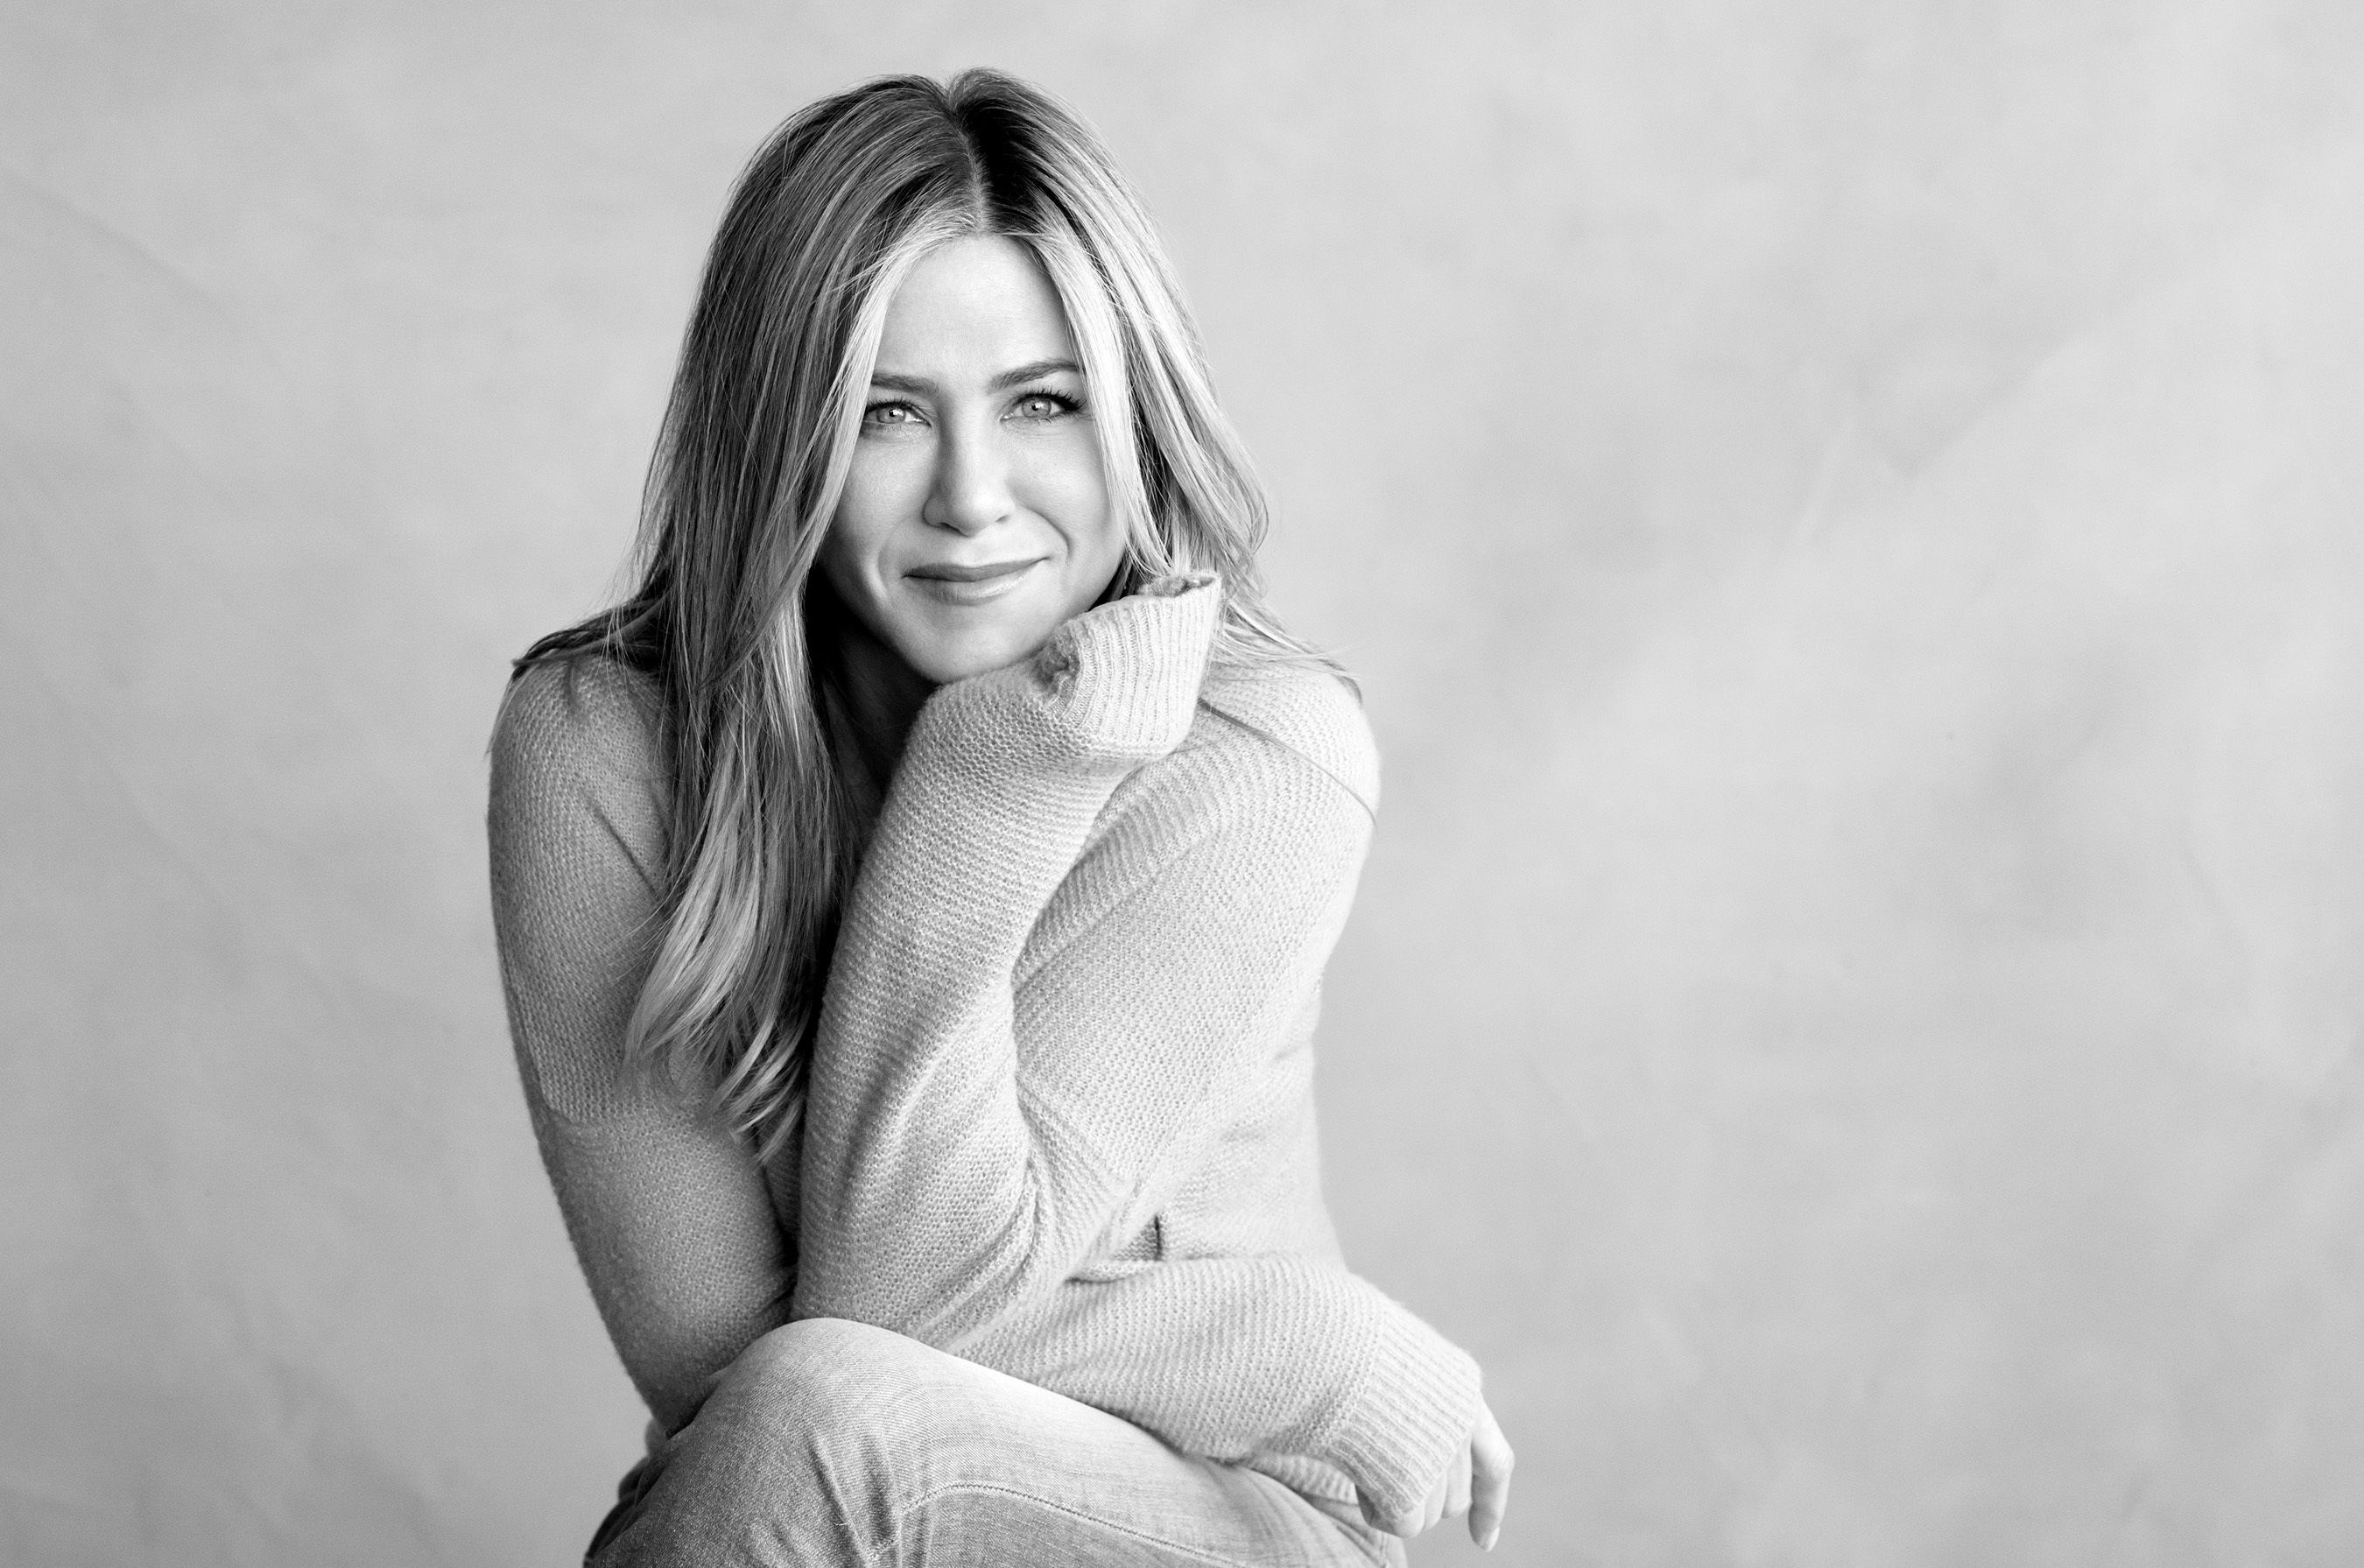 Jennifer Aniston, Wallpapers, Top Free, Backgrounds, 2700x1800 HD Desktop